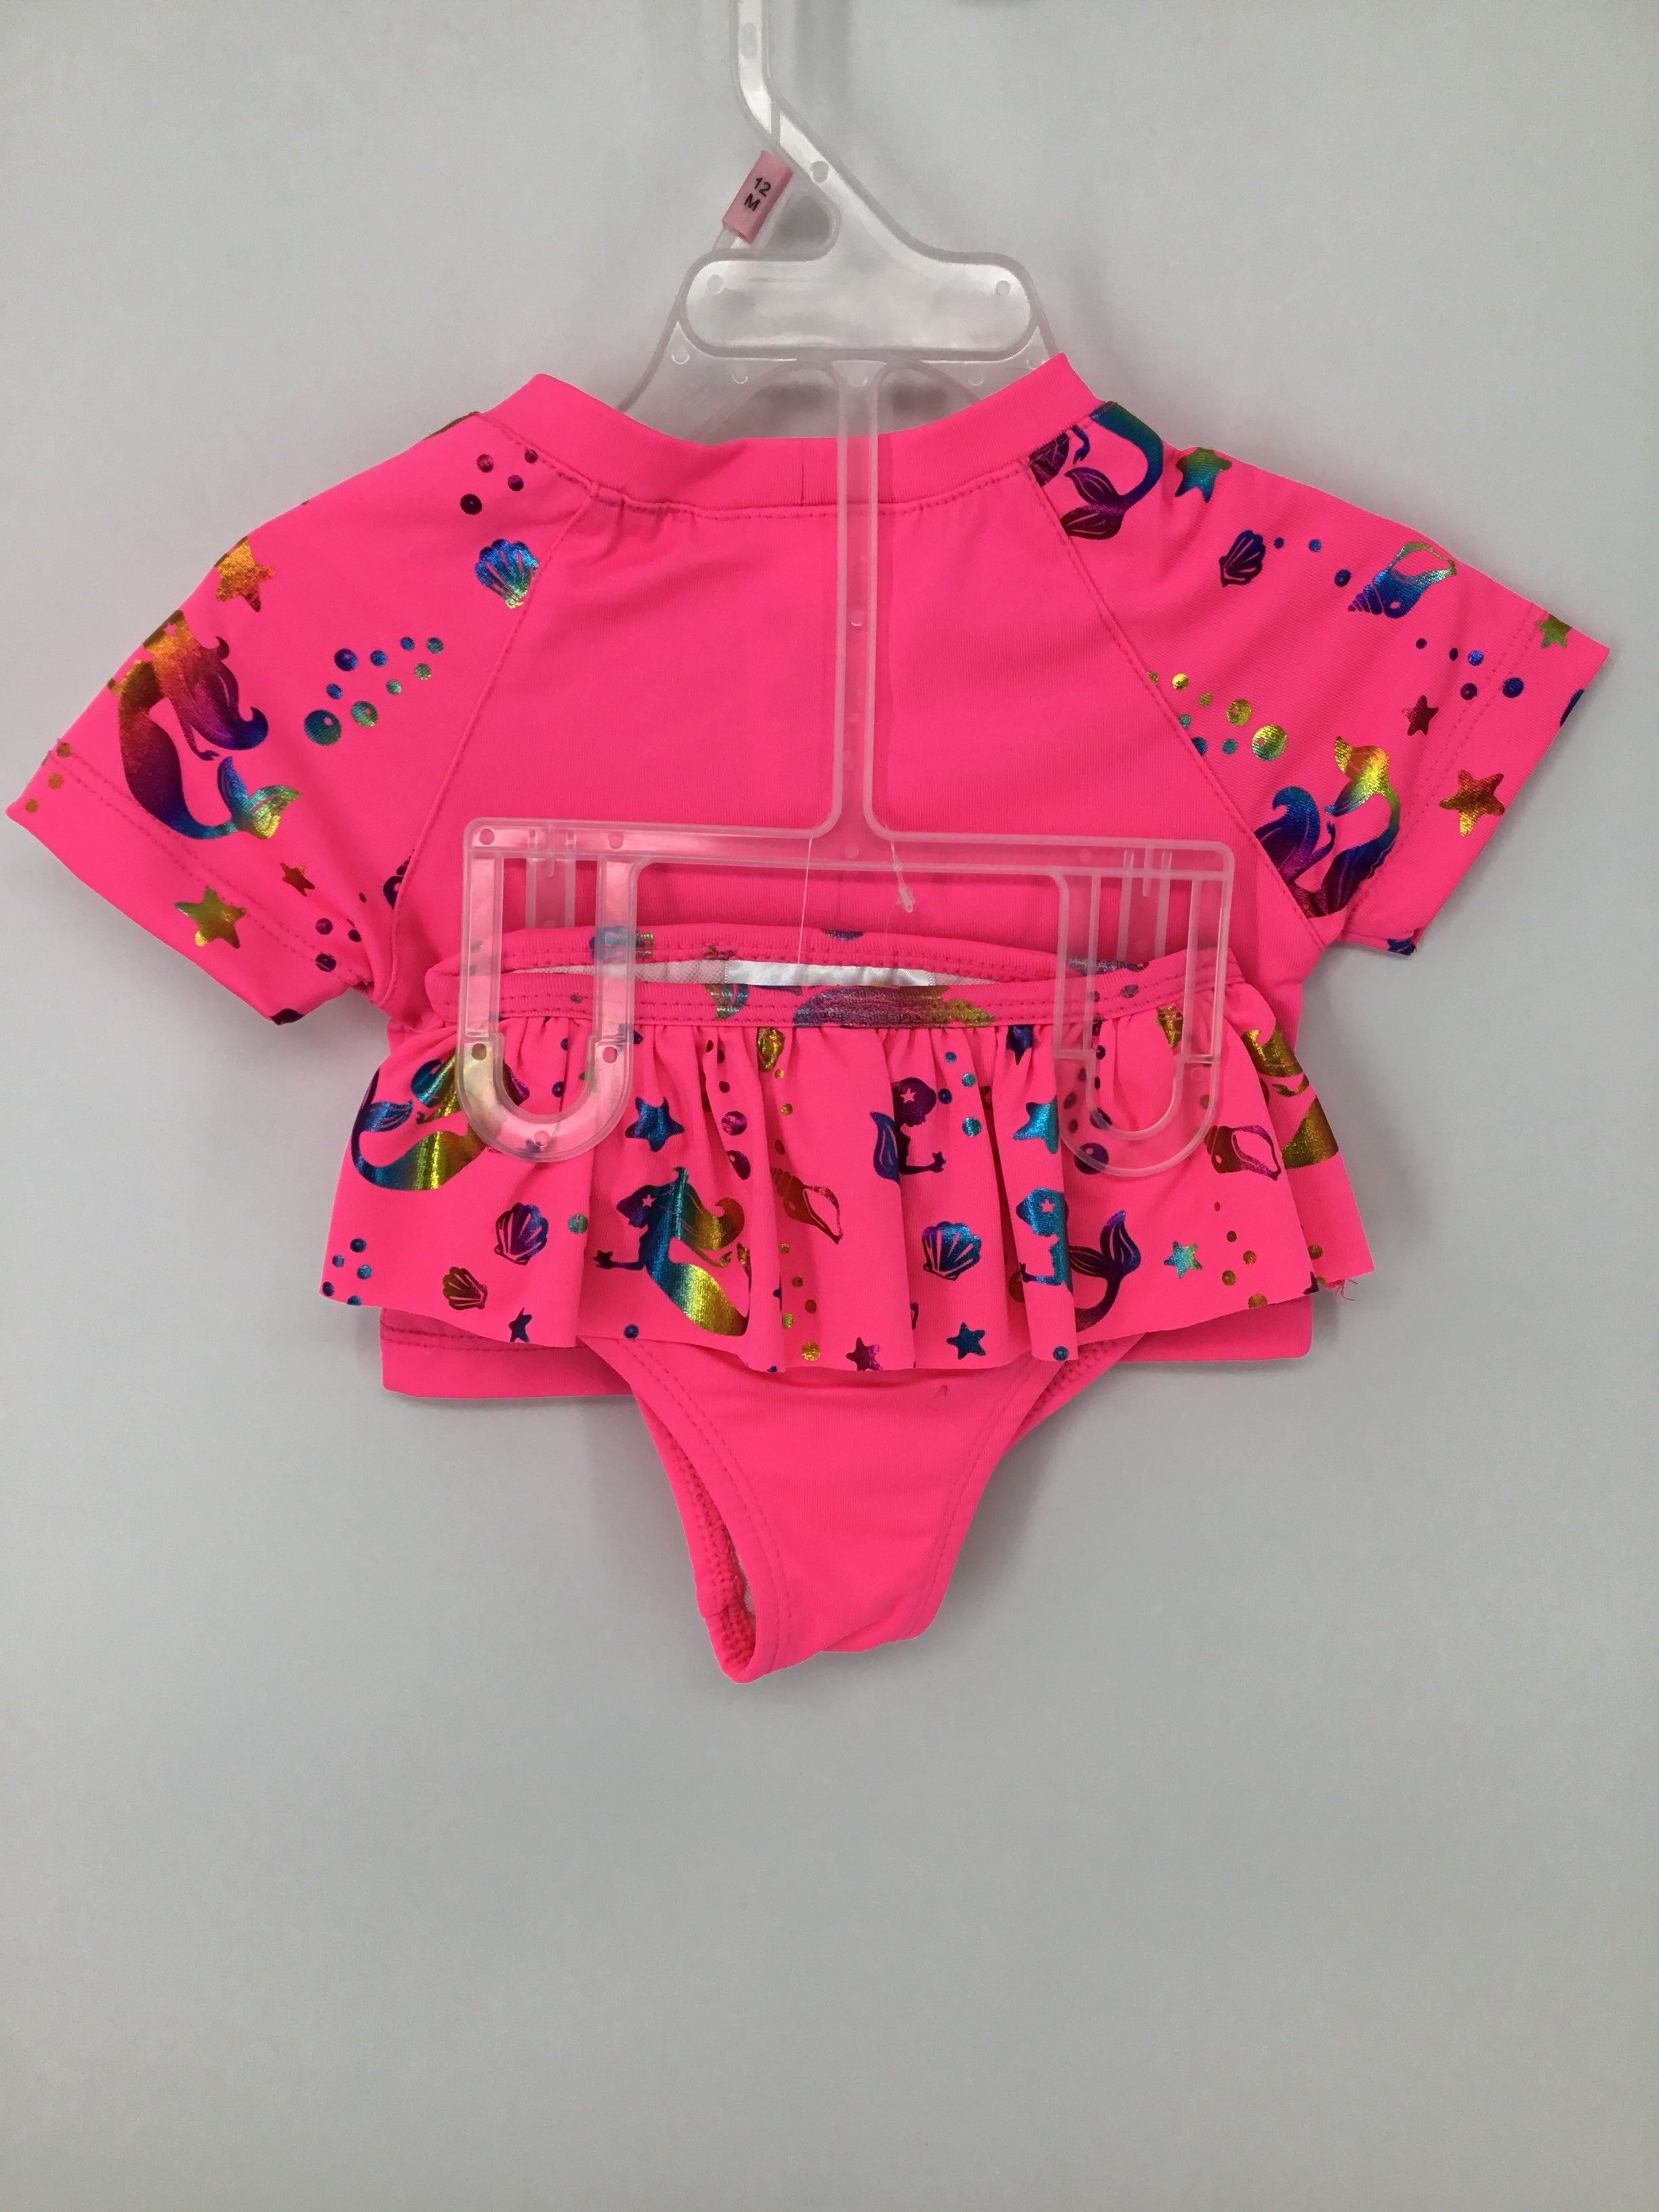 Lemon Kiss Child Size 12 Months Pink Swimwear - girls